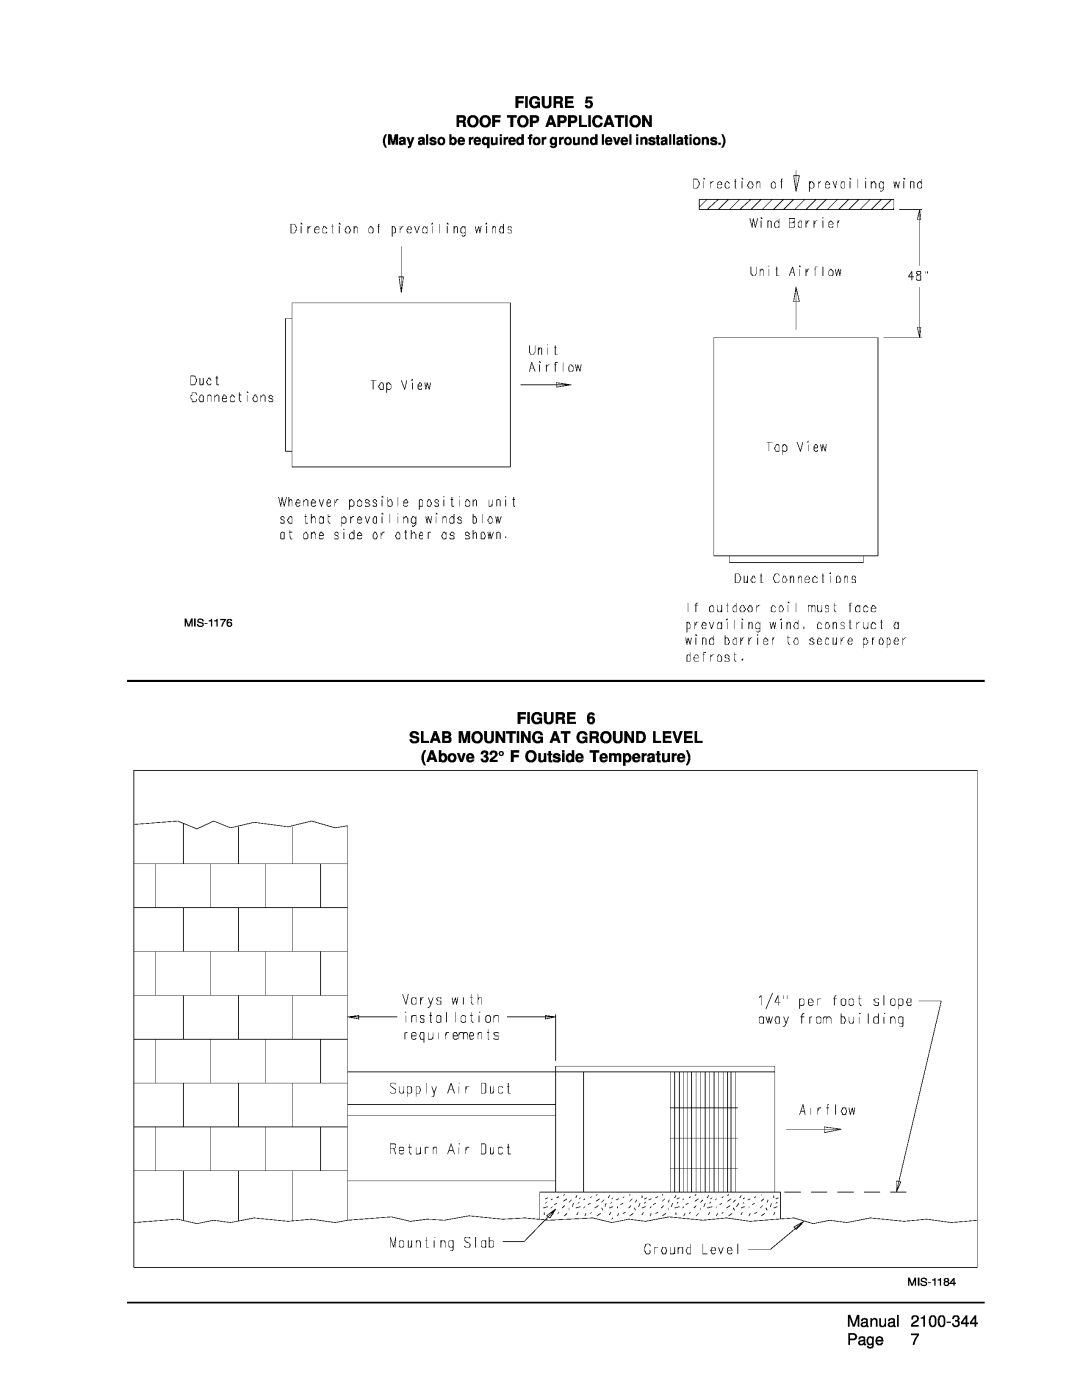 Bard PH1230, PH1236, PH1224 installation instructions Figure Roof Top Application, MIS-1176, MIS-1184 